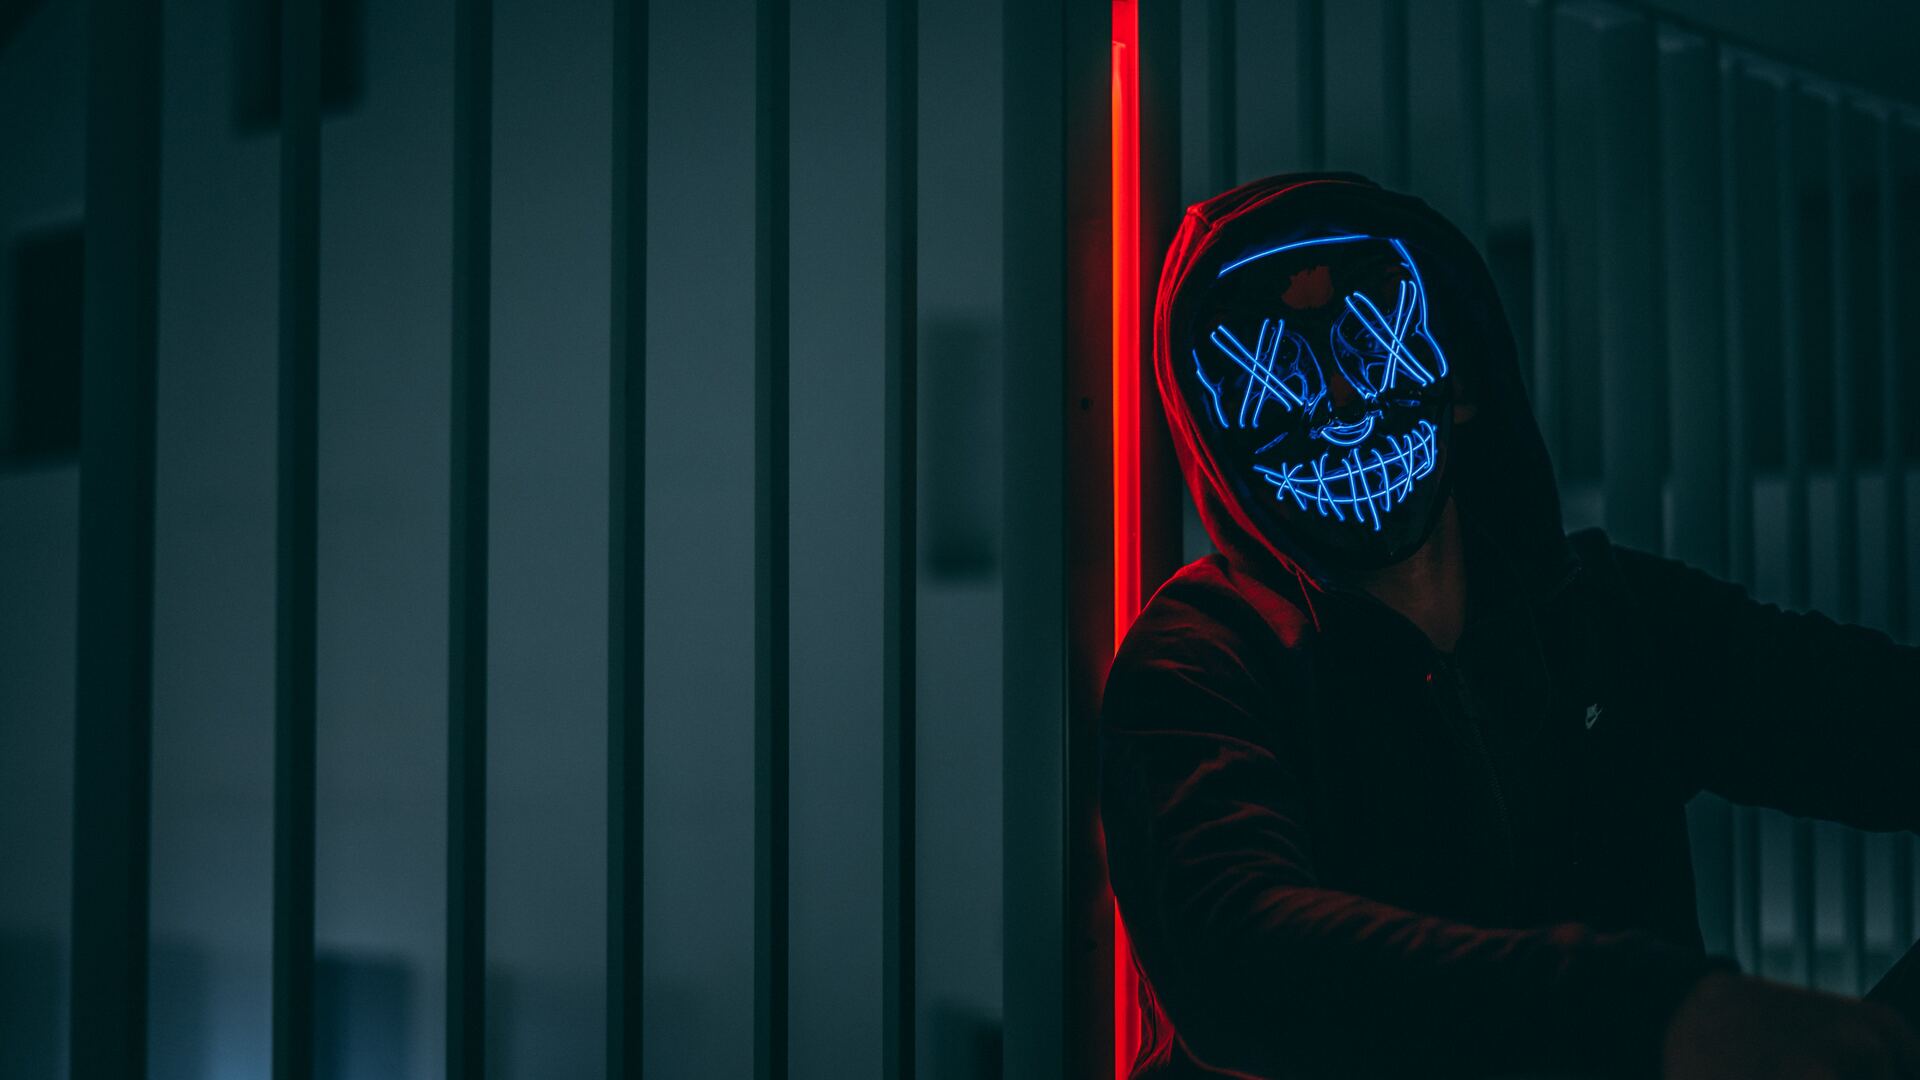 Mask anonymous hoodie guy hd wallpaper